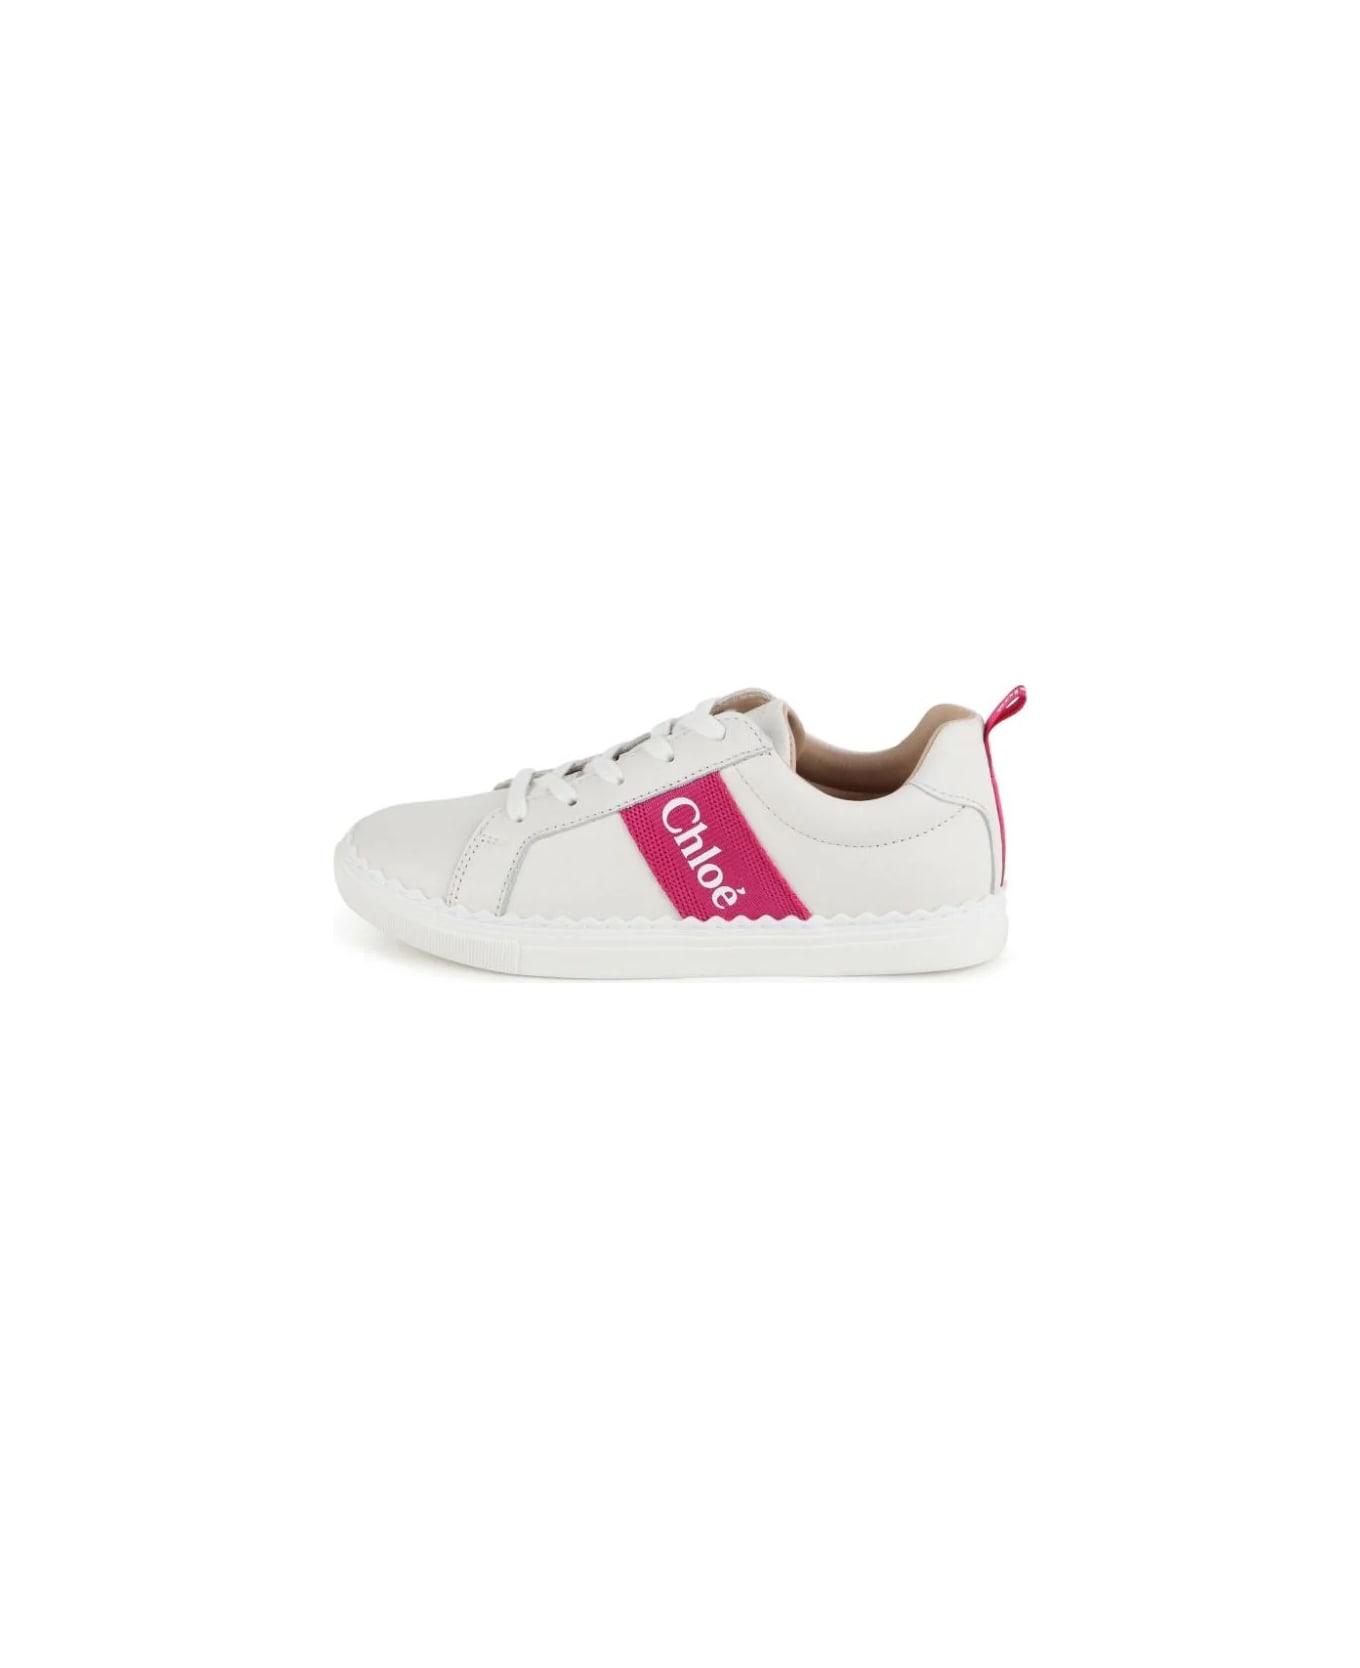 Chloé White And Fuchsia Lauren Low Sneakers - White